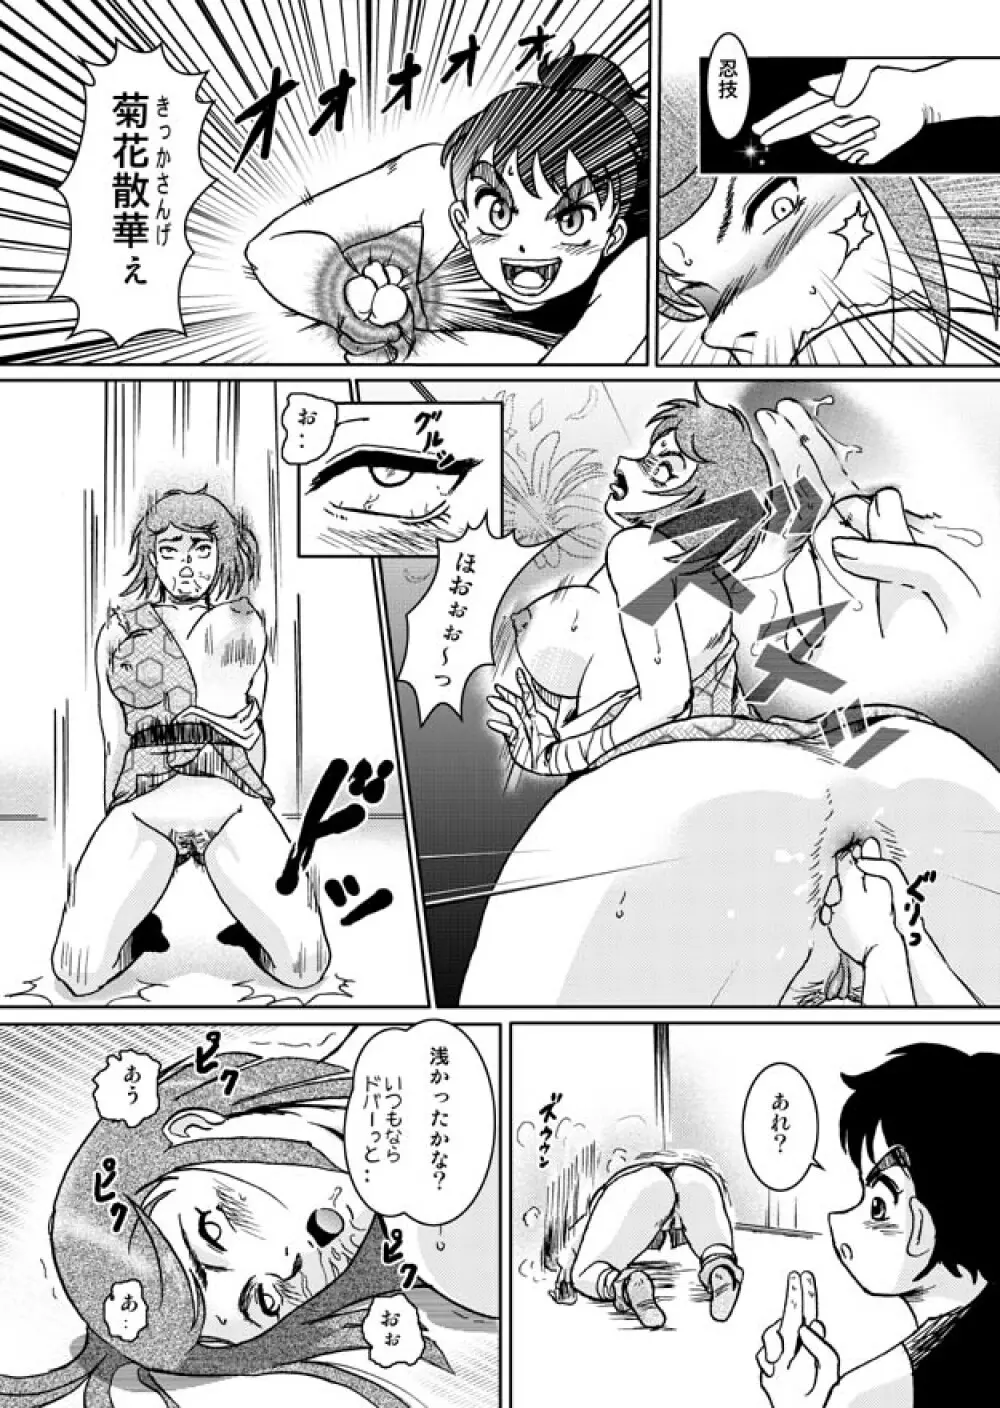 Same-themed manga about kid fighting female ninjas from japanese imageboard. 13ページ